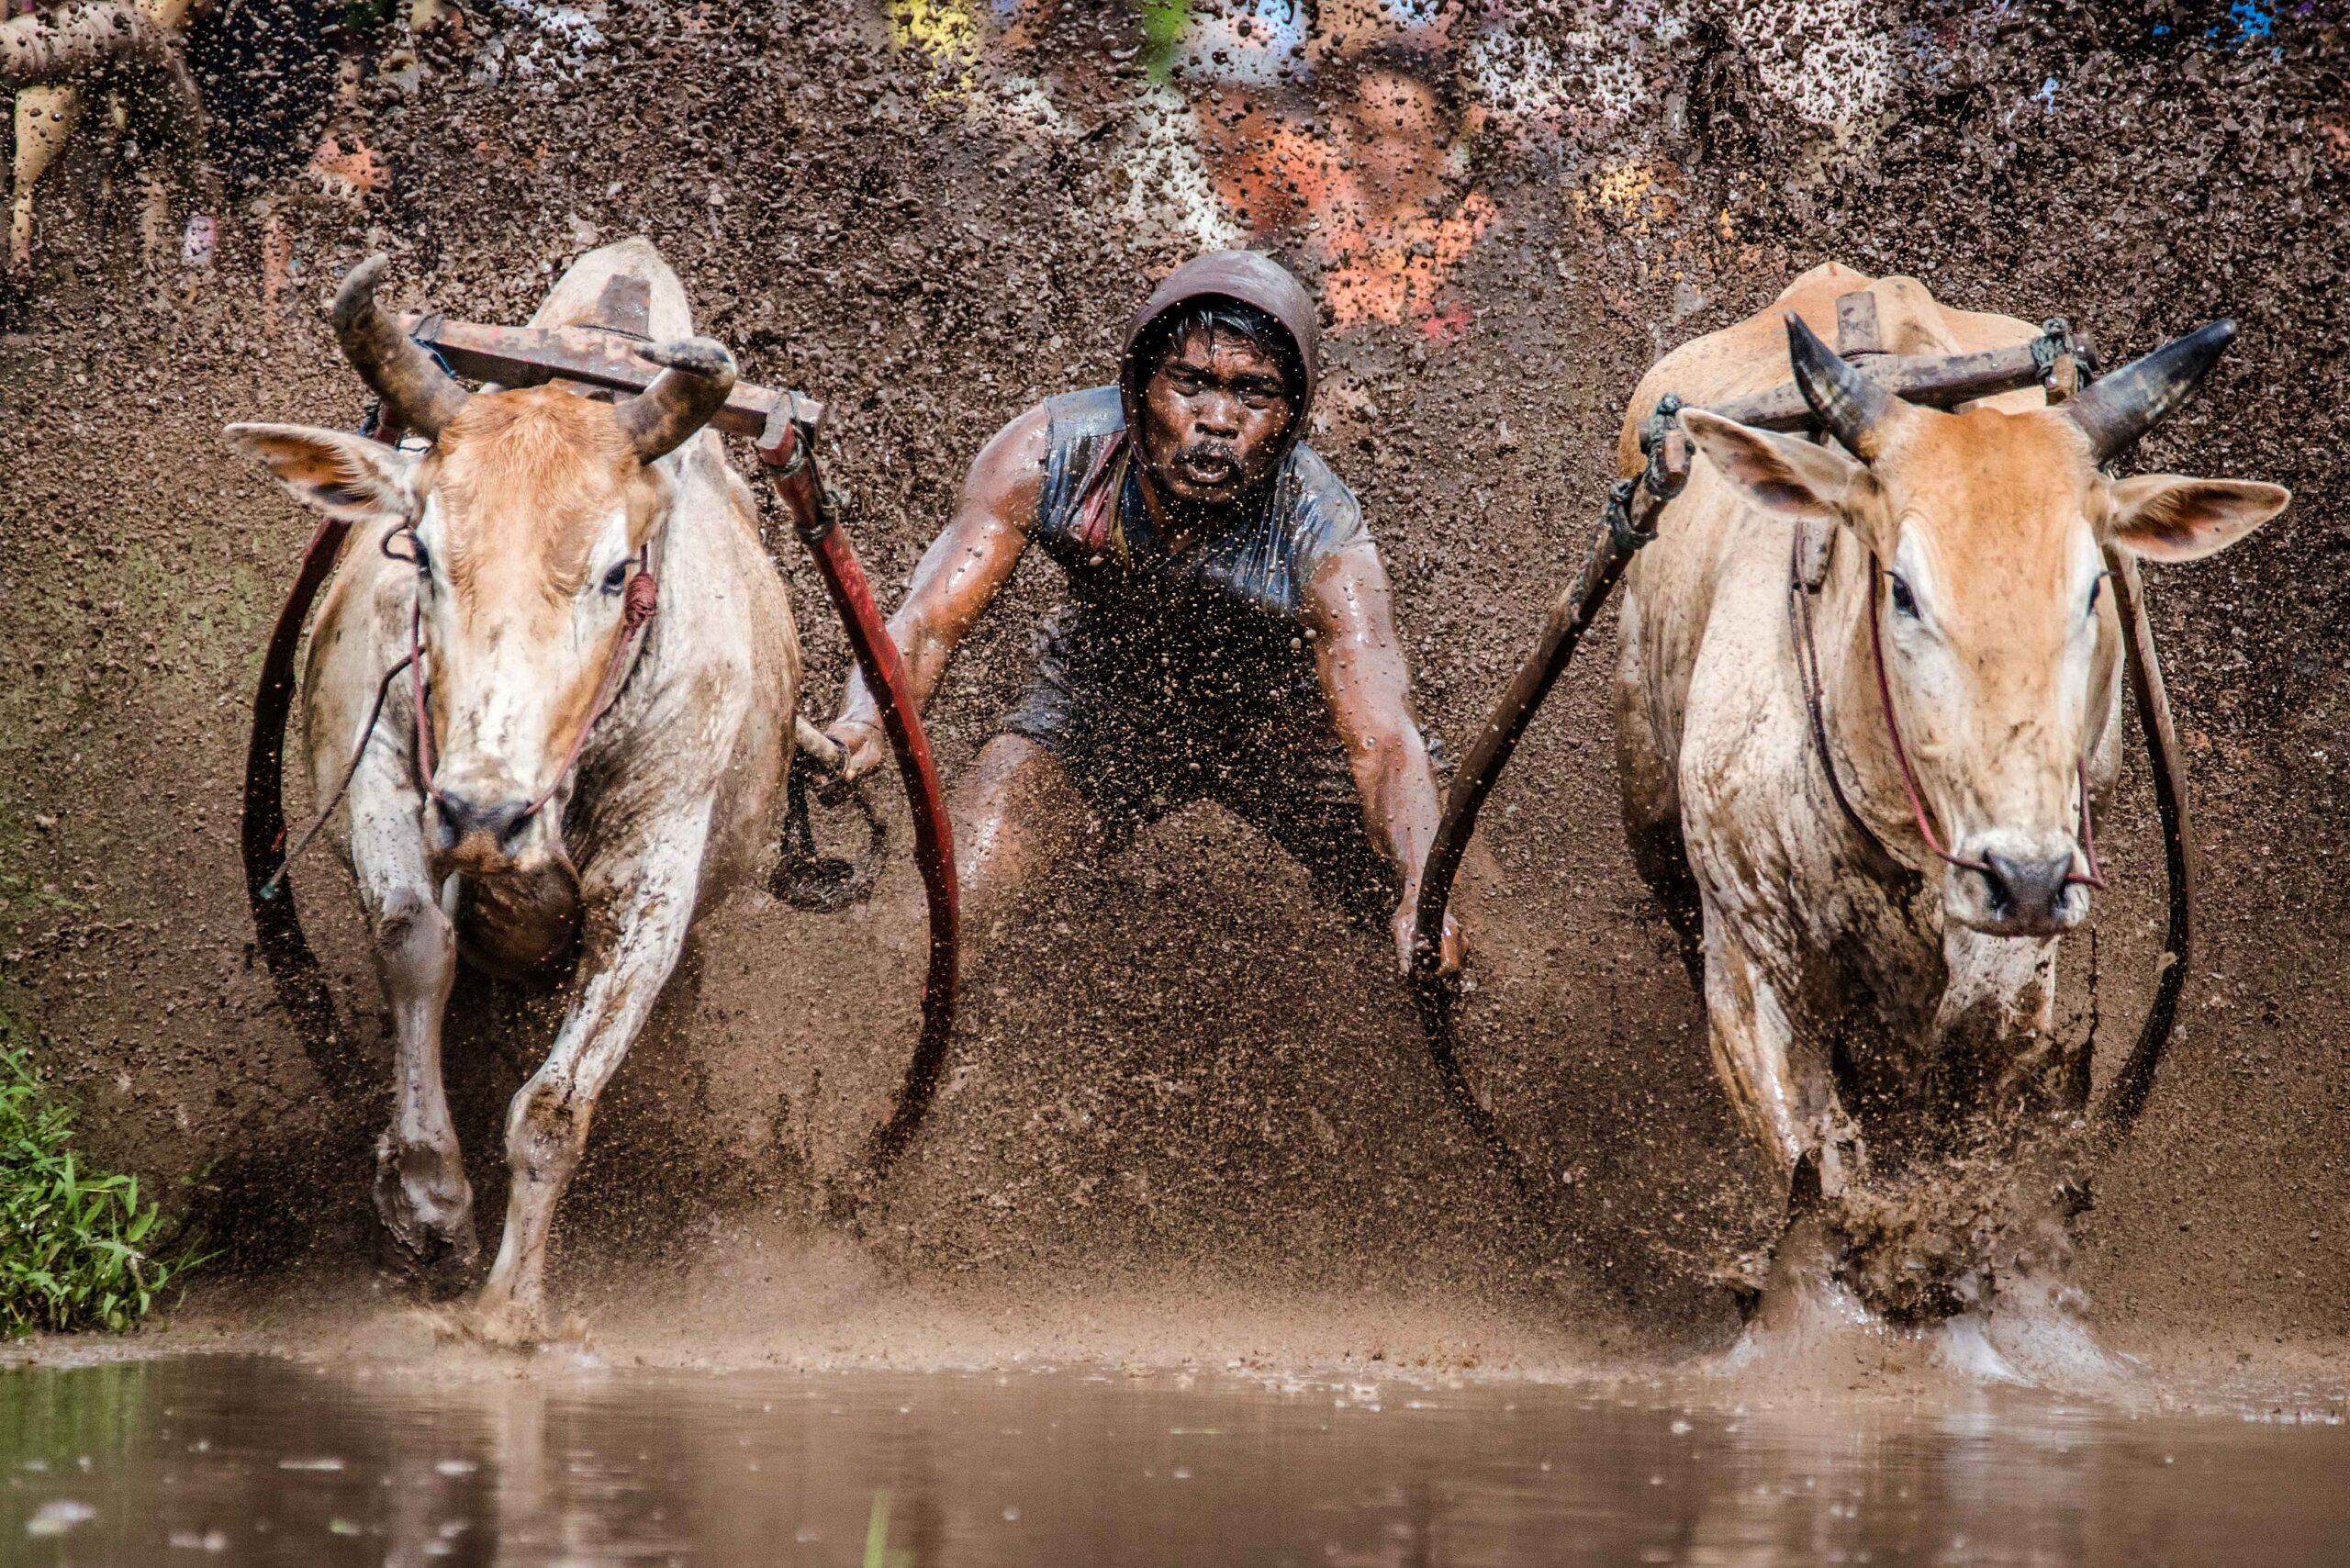 Mud_Cow_Racing_-_Pacu_Jawi_-_West_Sumatra,_Indonesia